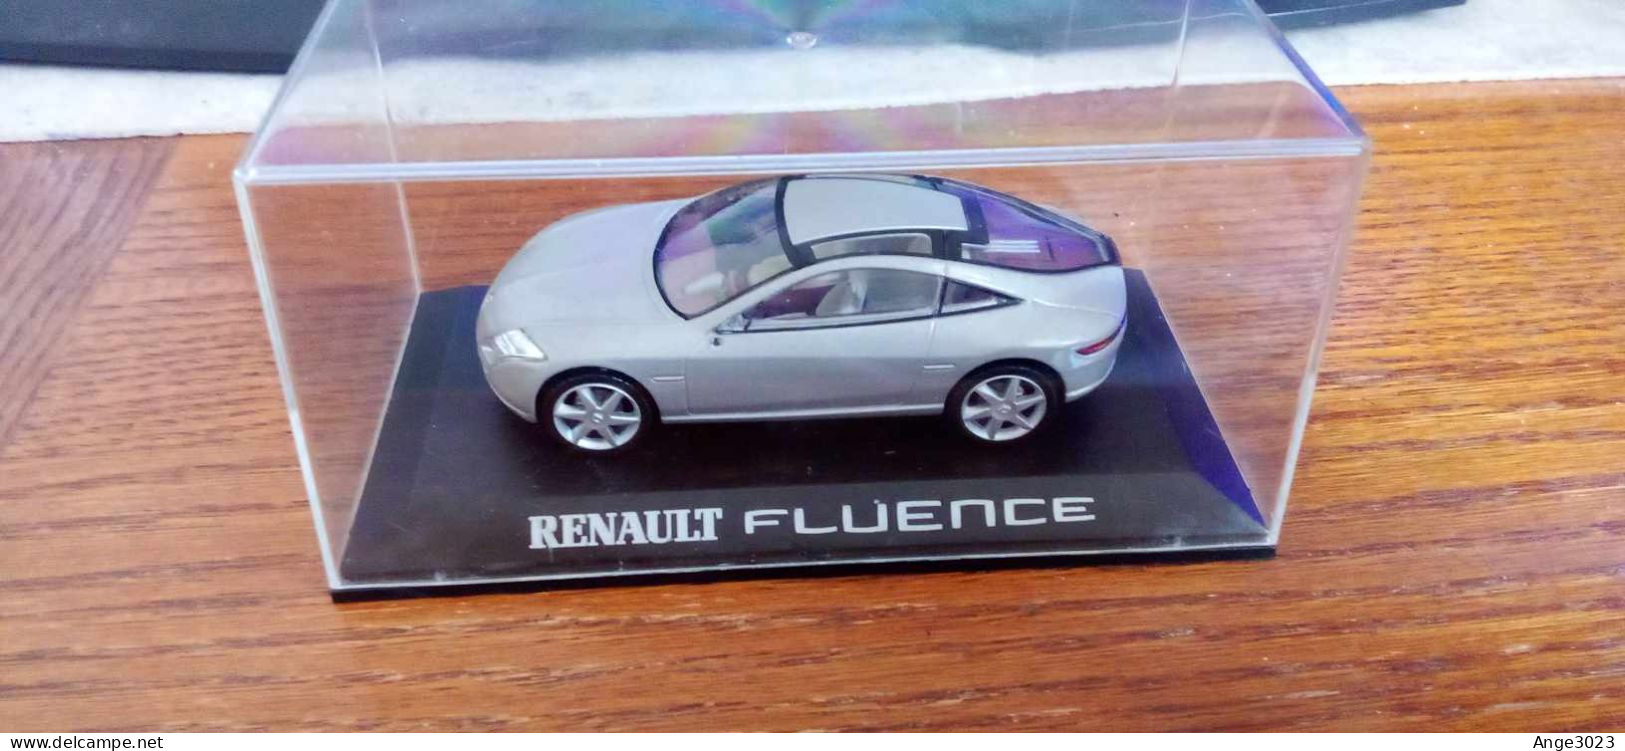 CONCEPT CAR RENAULT FLUENCE - Nzg